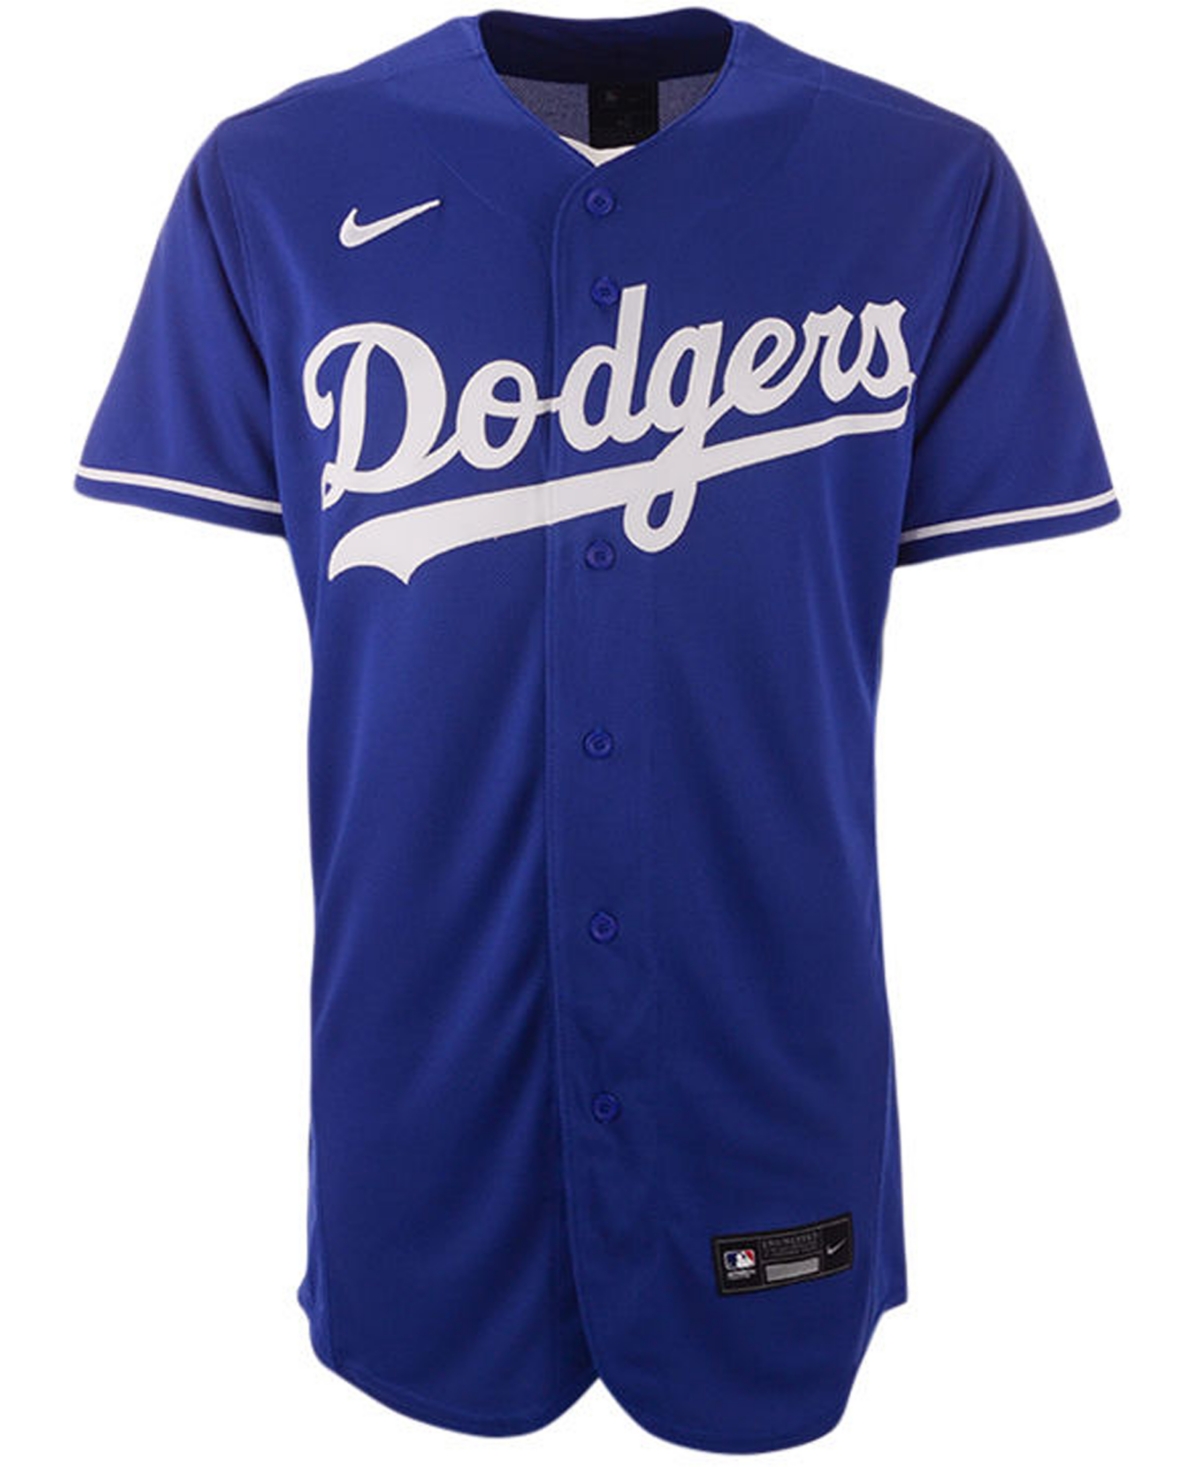 Nike Men's Los Angeles Dodgers Authentic On-Field Jersey